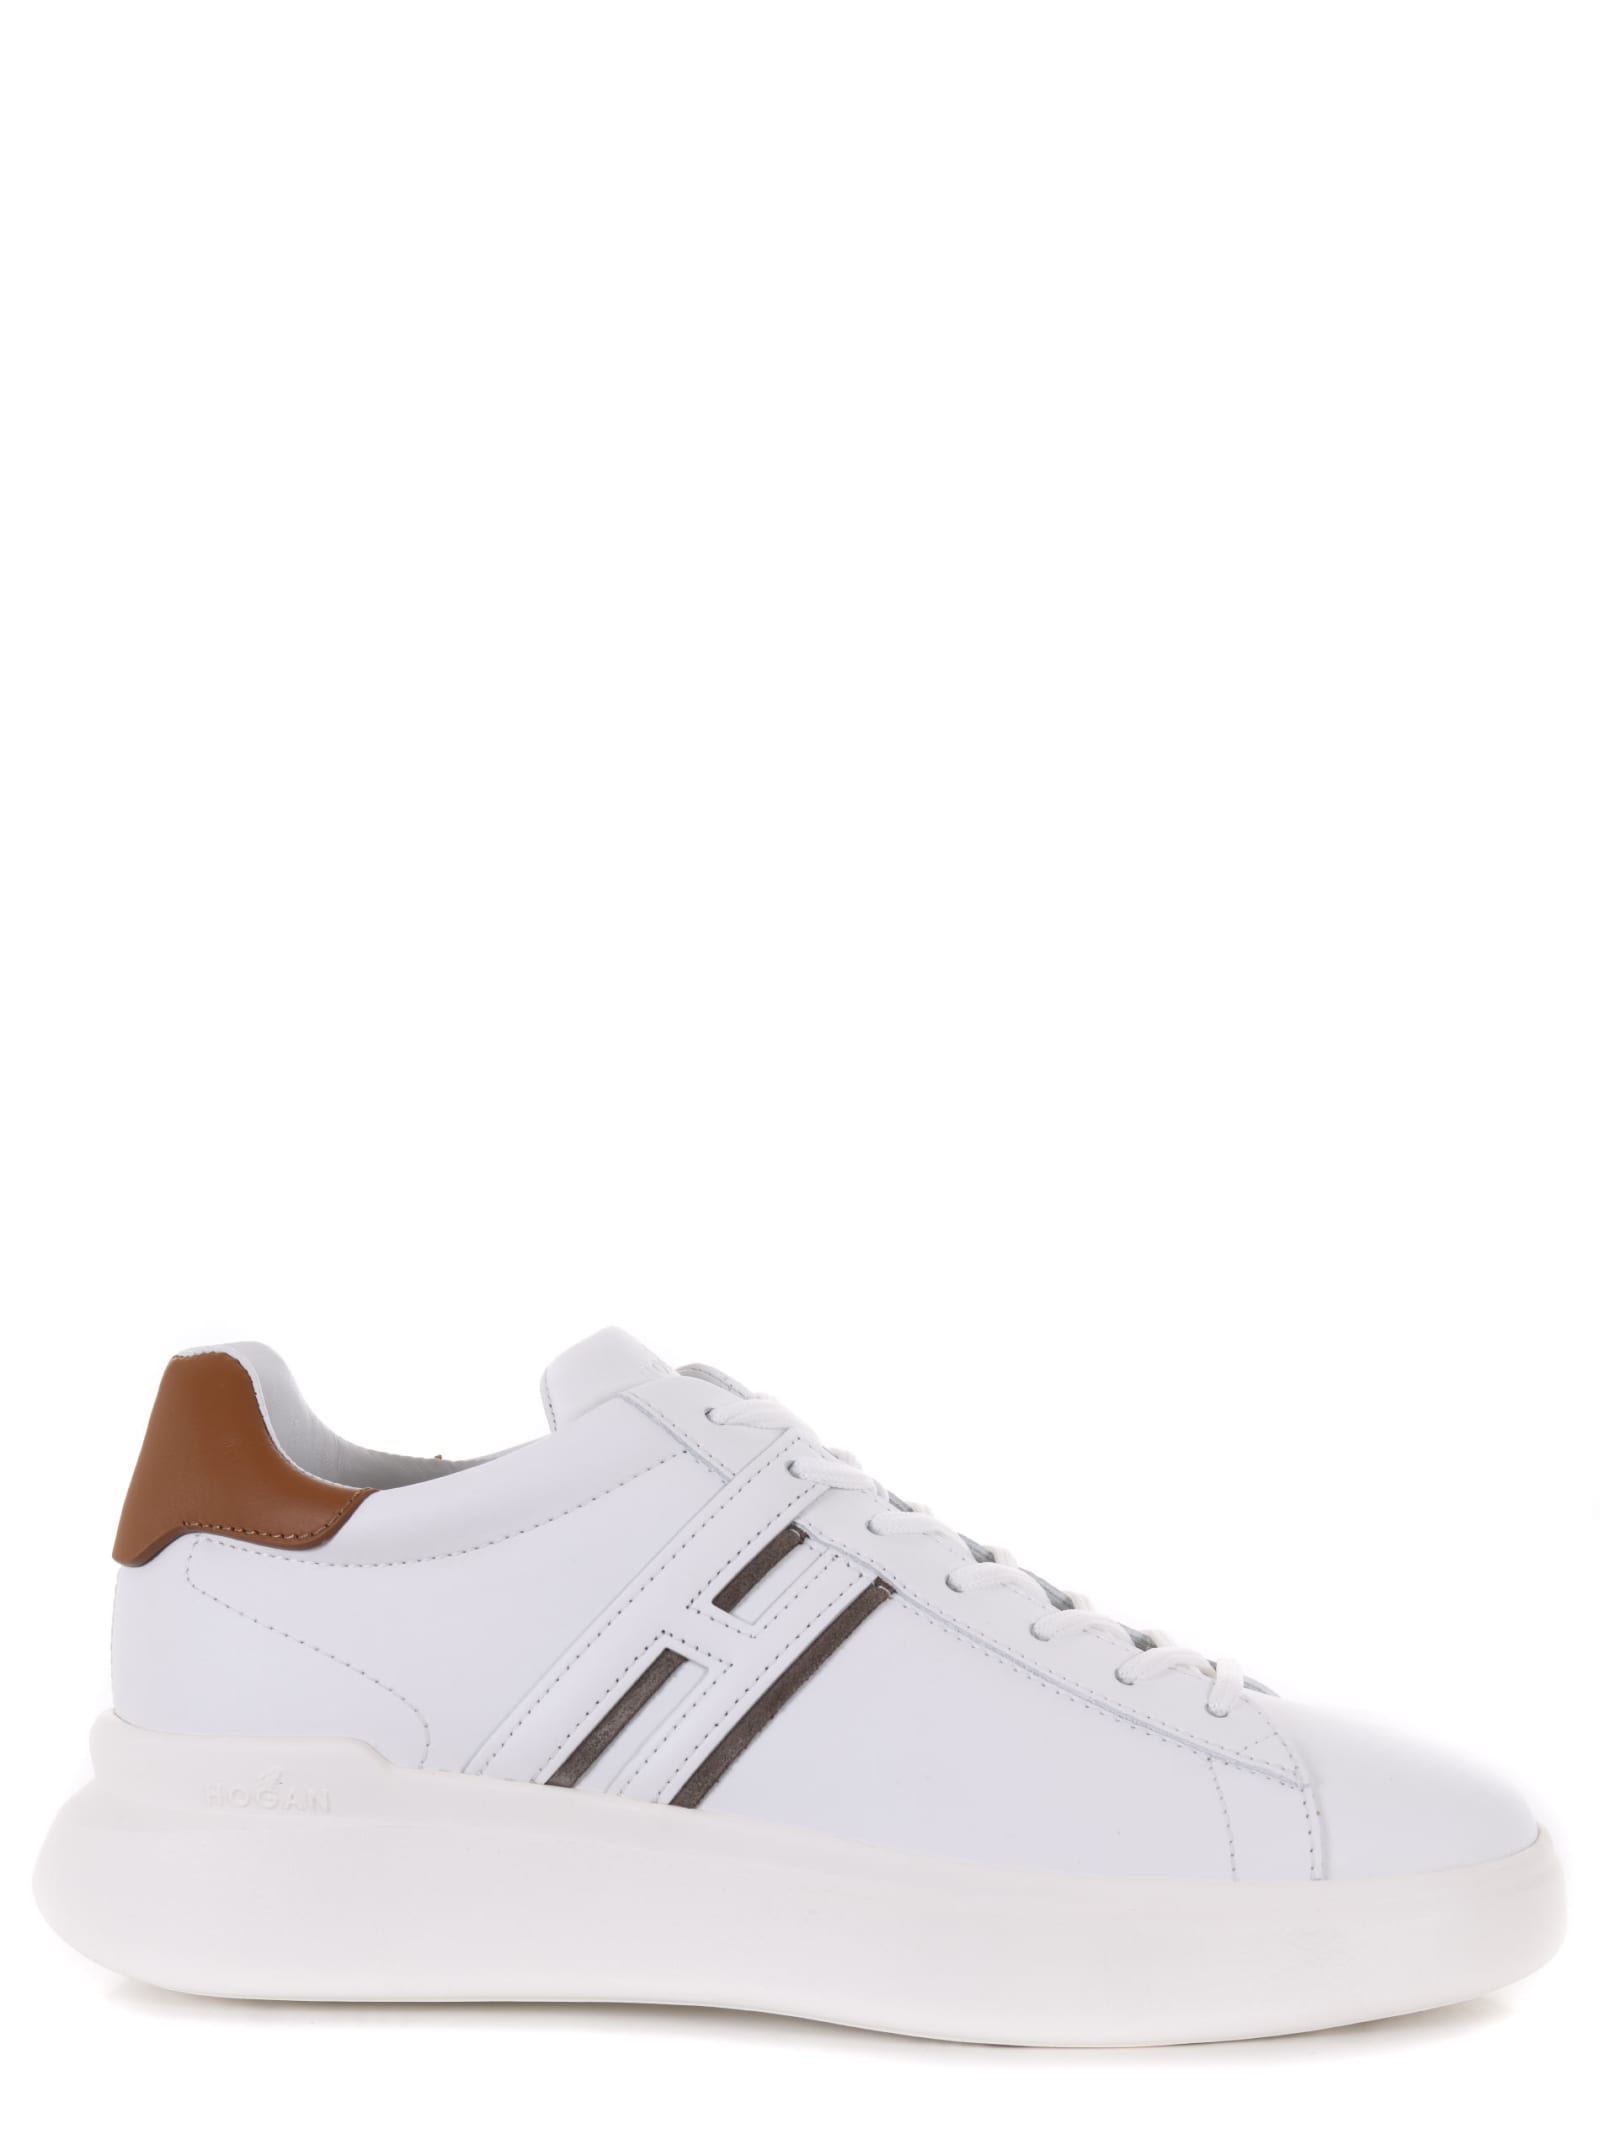 Shop Hogan H580 Leather Sneakers In Bianco/marrone